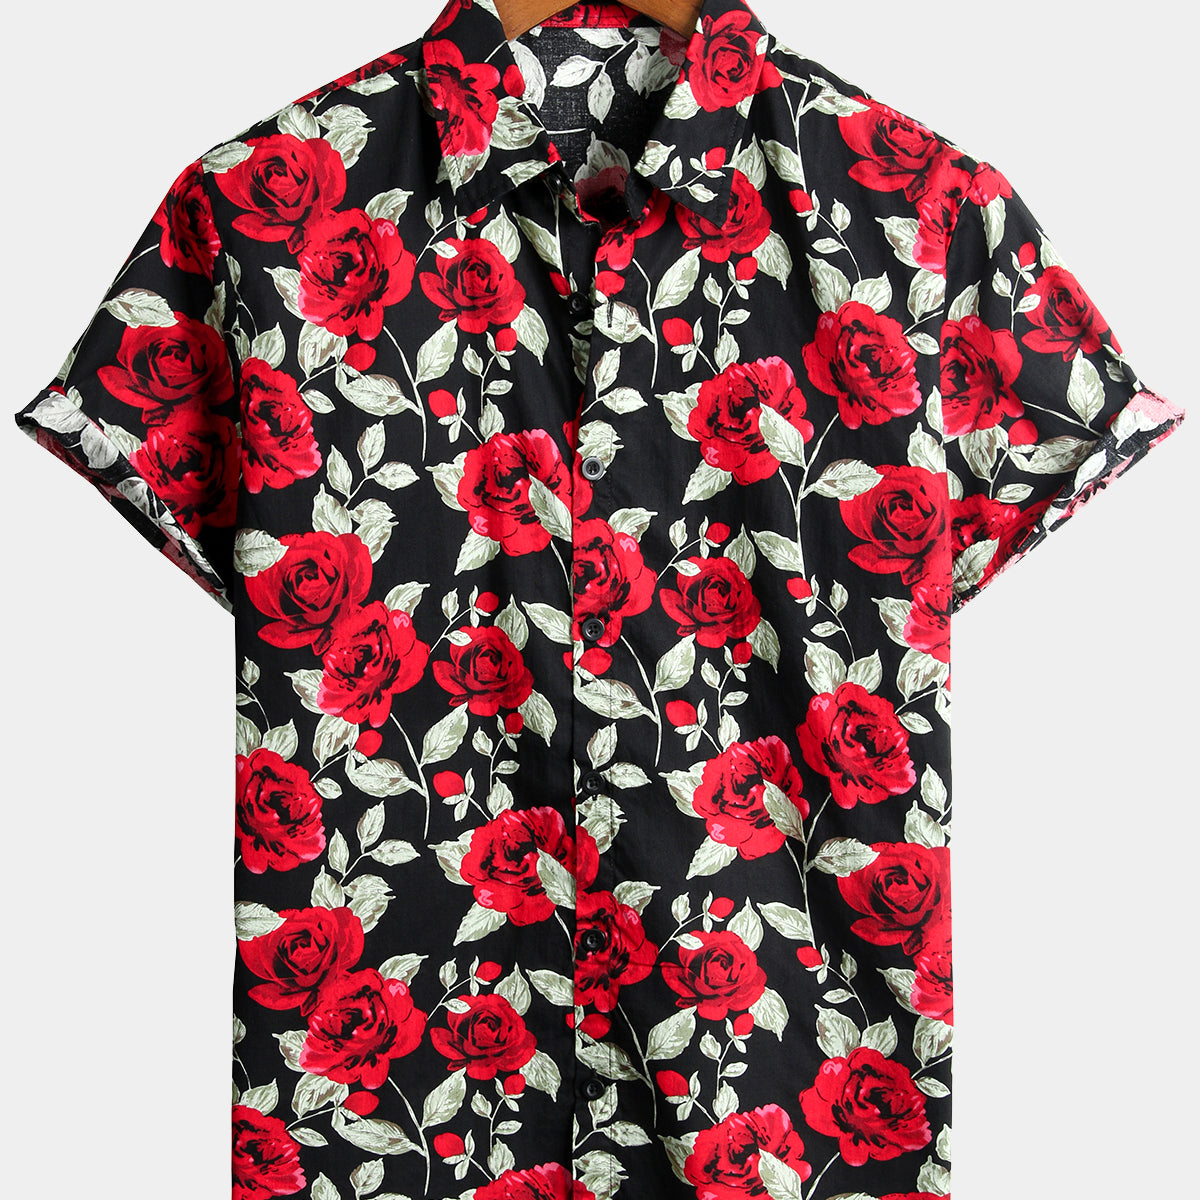 Men's Rose Print Cotton Short Sleeve Shirt